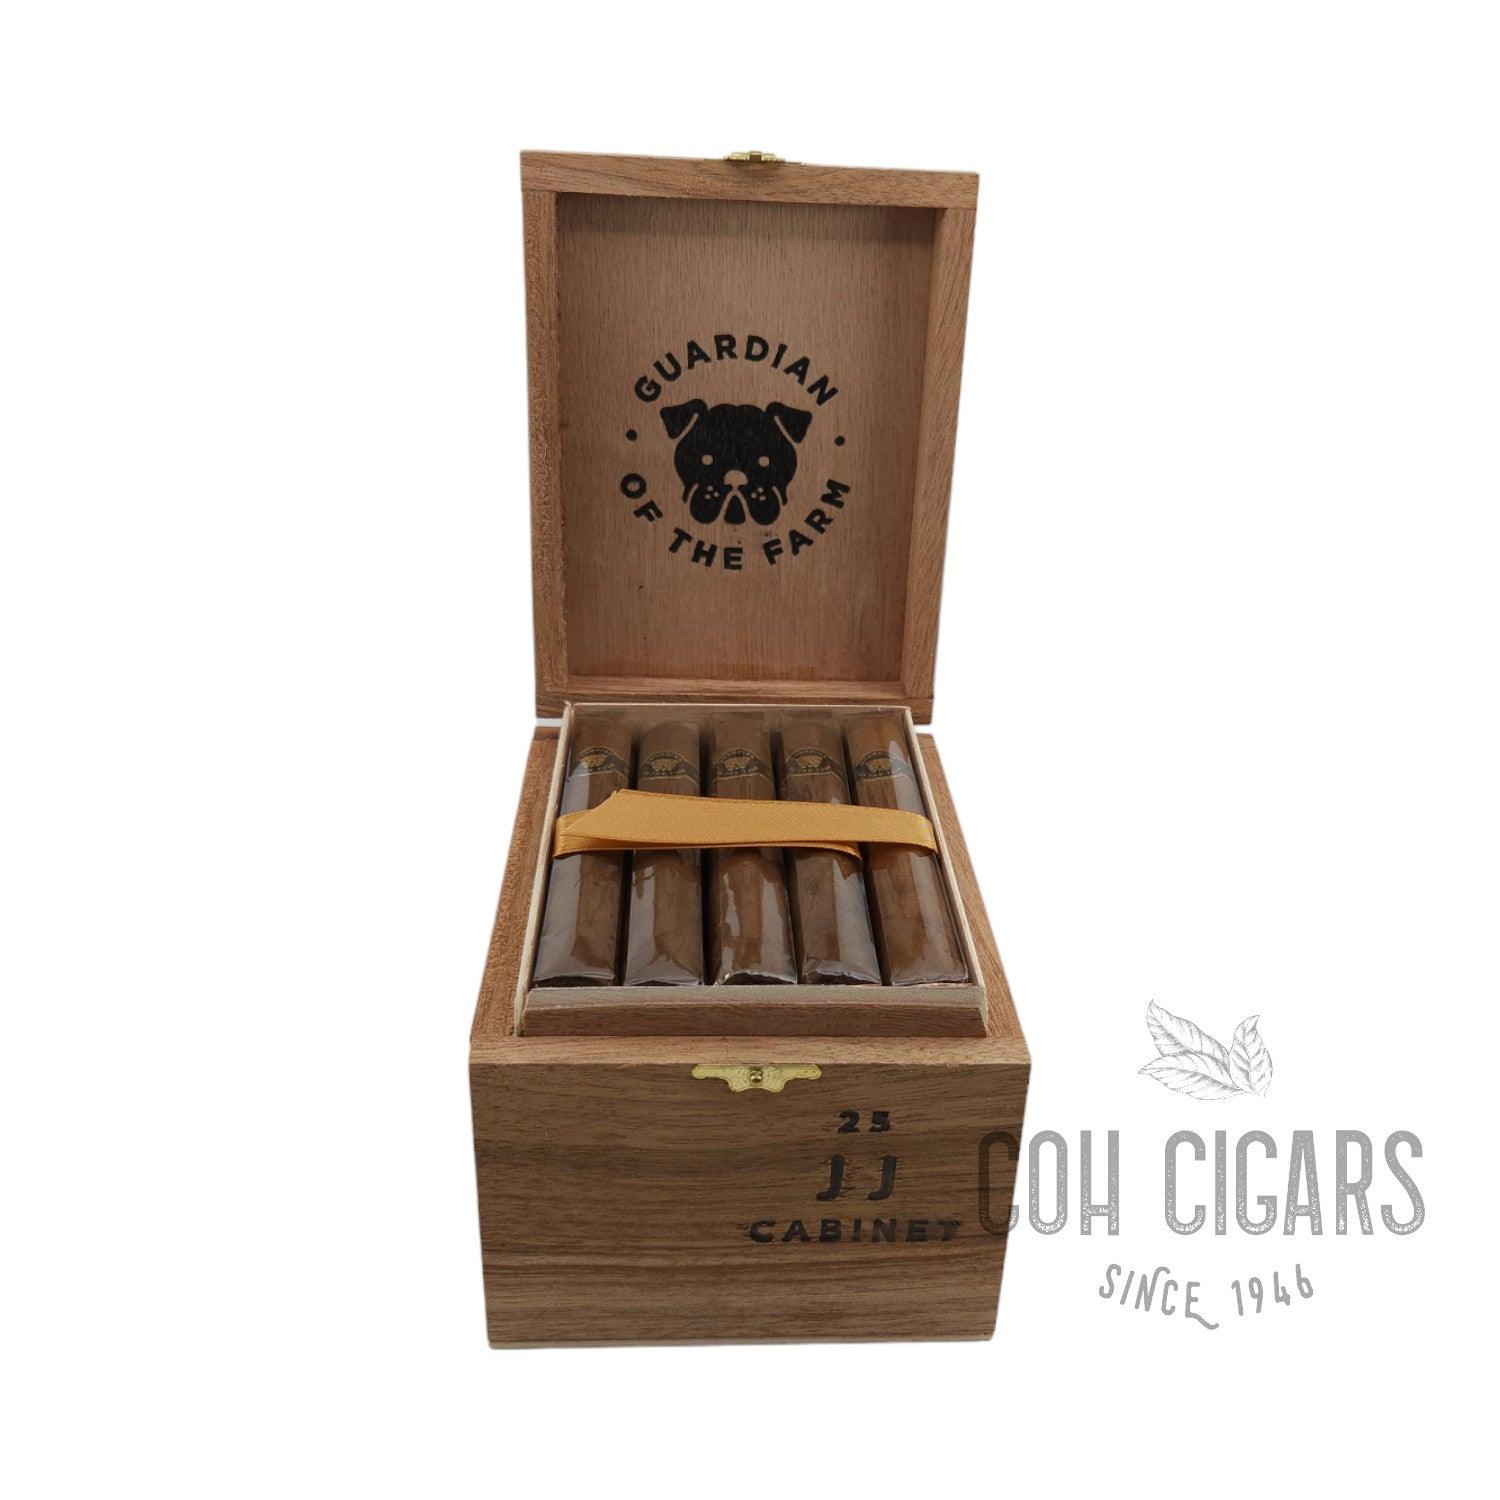 Aganorsa Leaf Cigar | Guardian Of The Farm JJ Cabinet | Box 25 - HK CohCigars